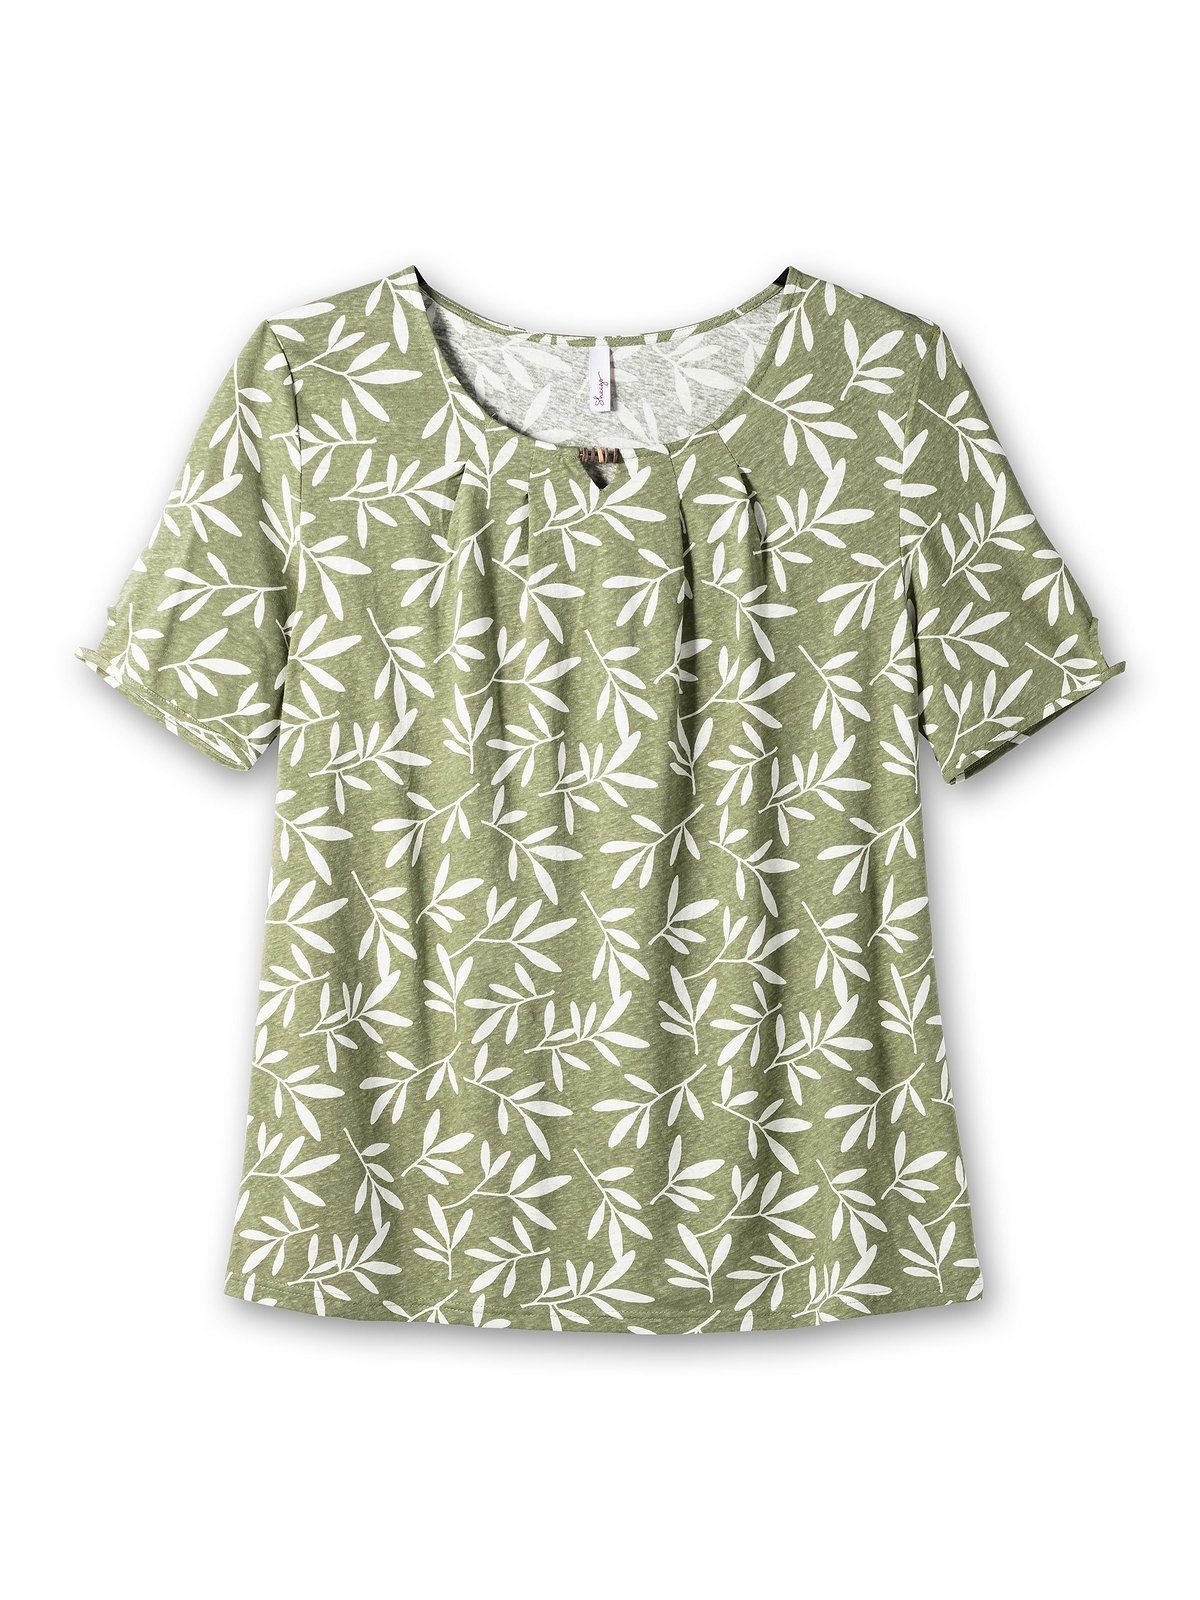 Sheego T-Shirt Große khaki Leinen-Mix Größen gemustert Blätterprint, mit im